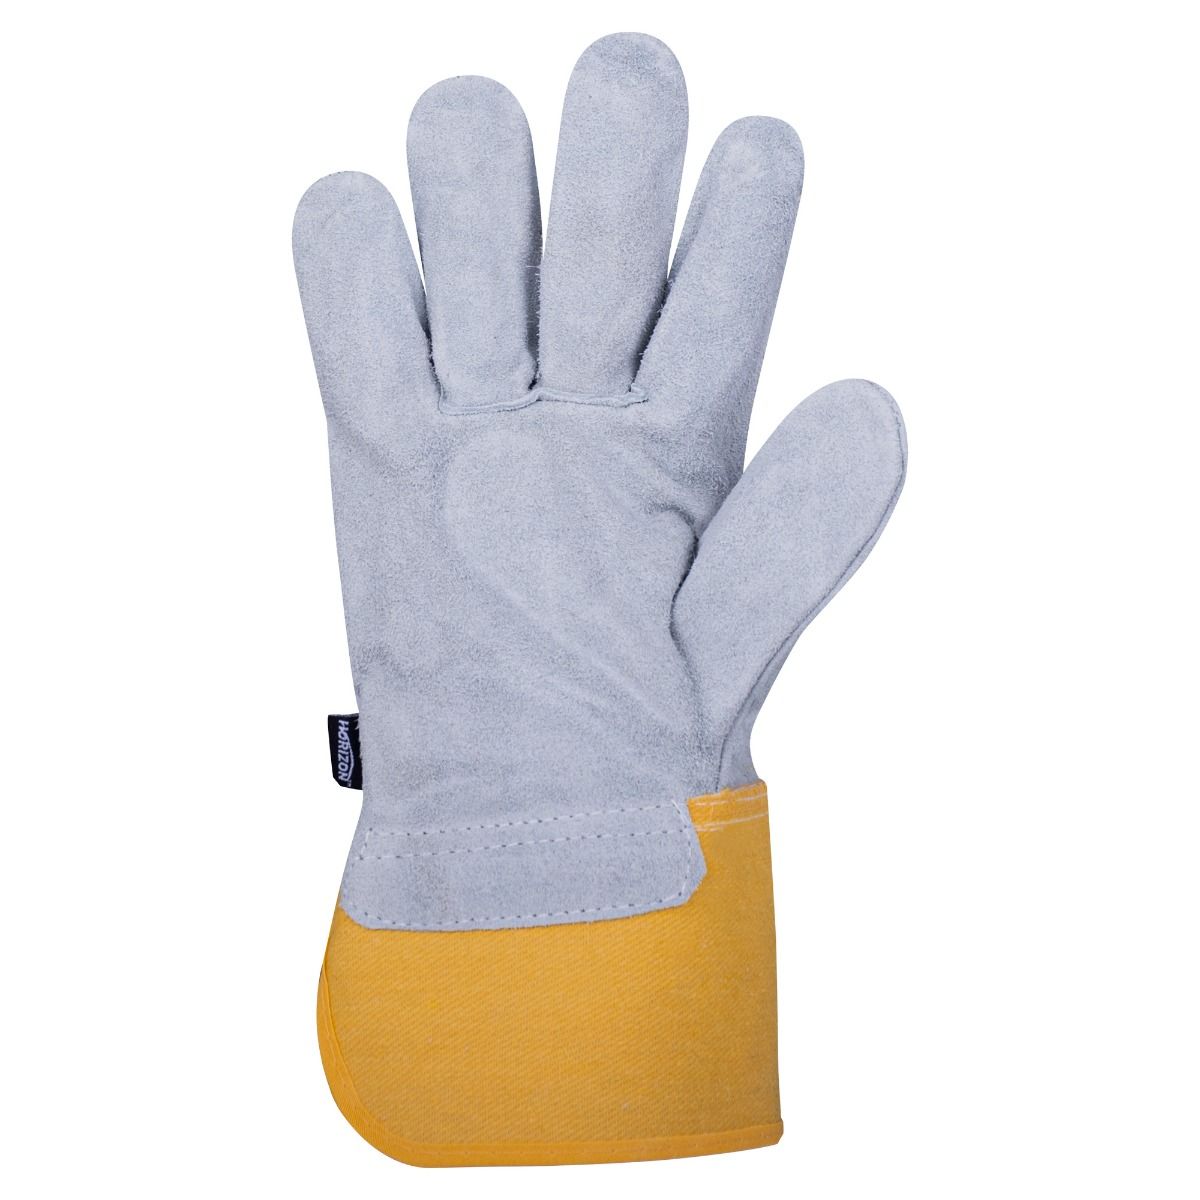 Horizon Canvas Back Cowsplit Palm Rubberized Cuff Work Gloves